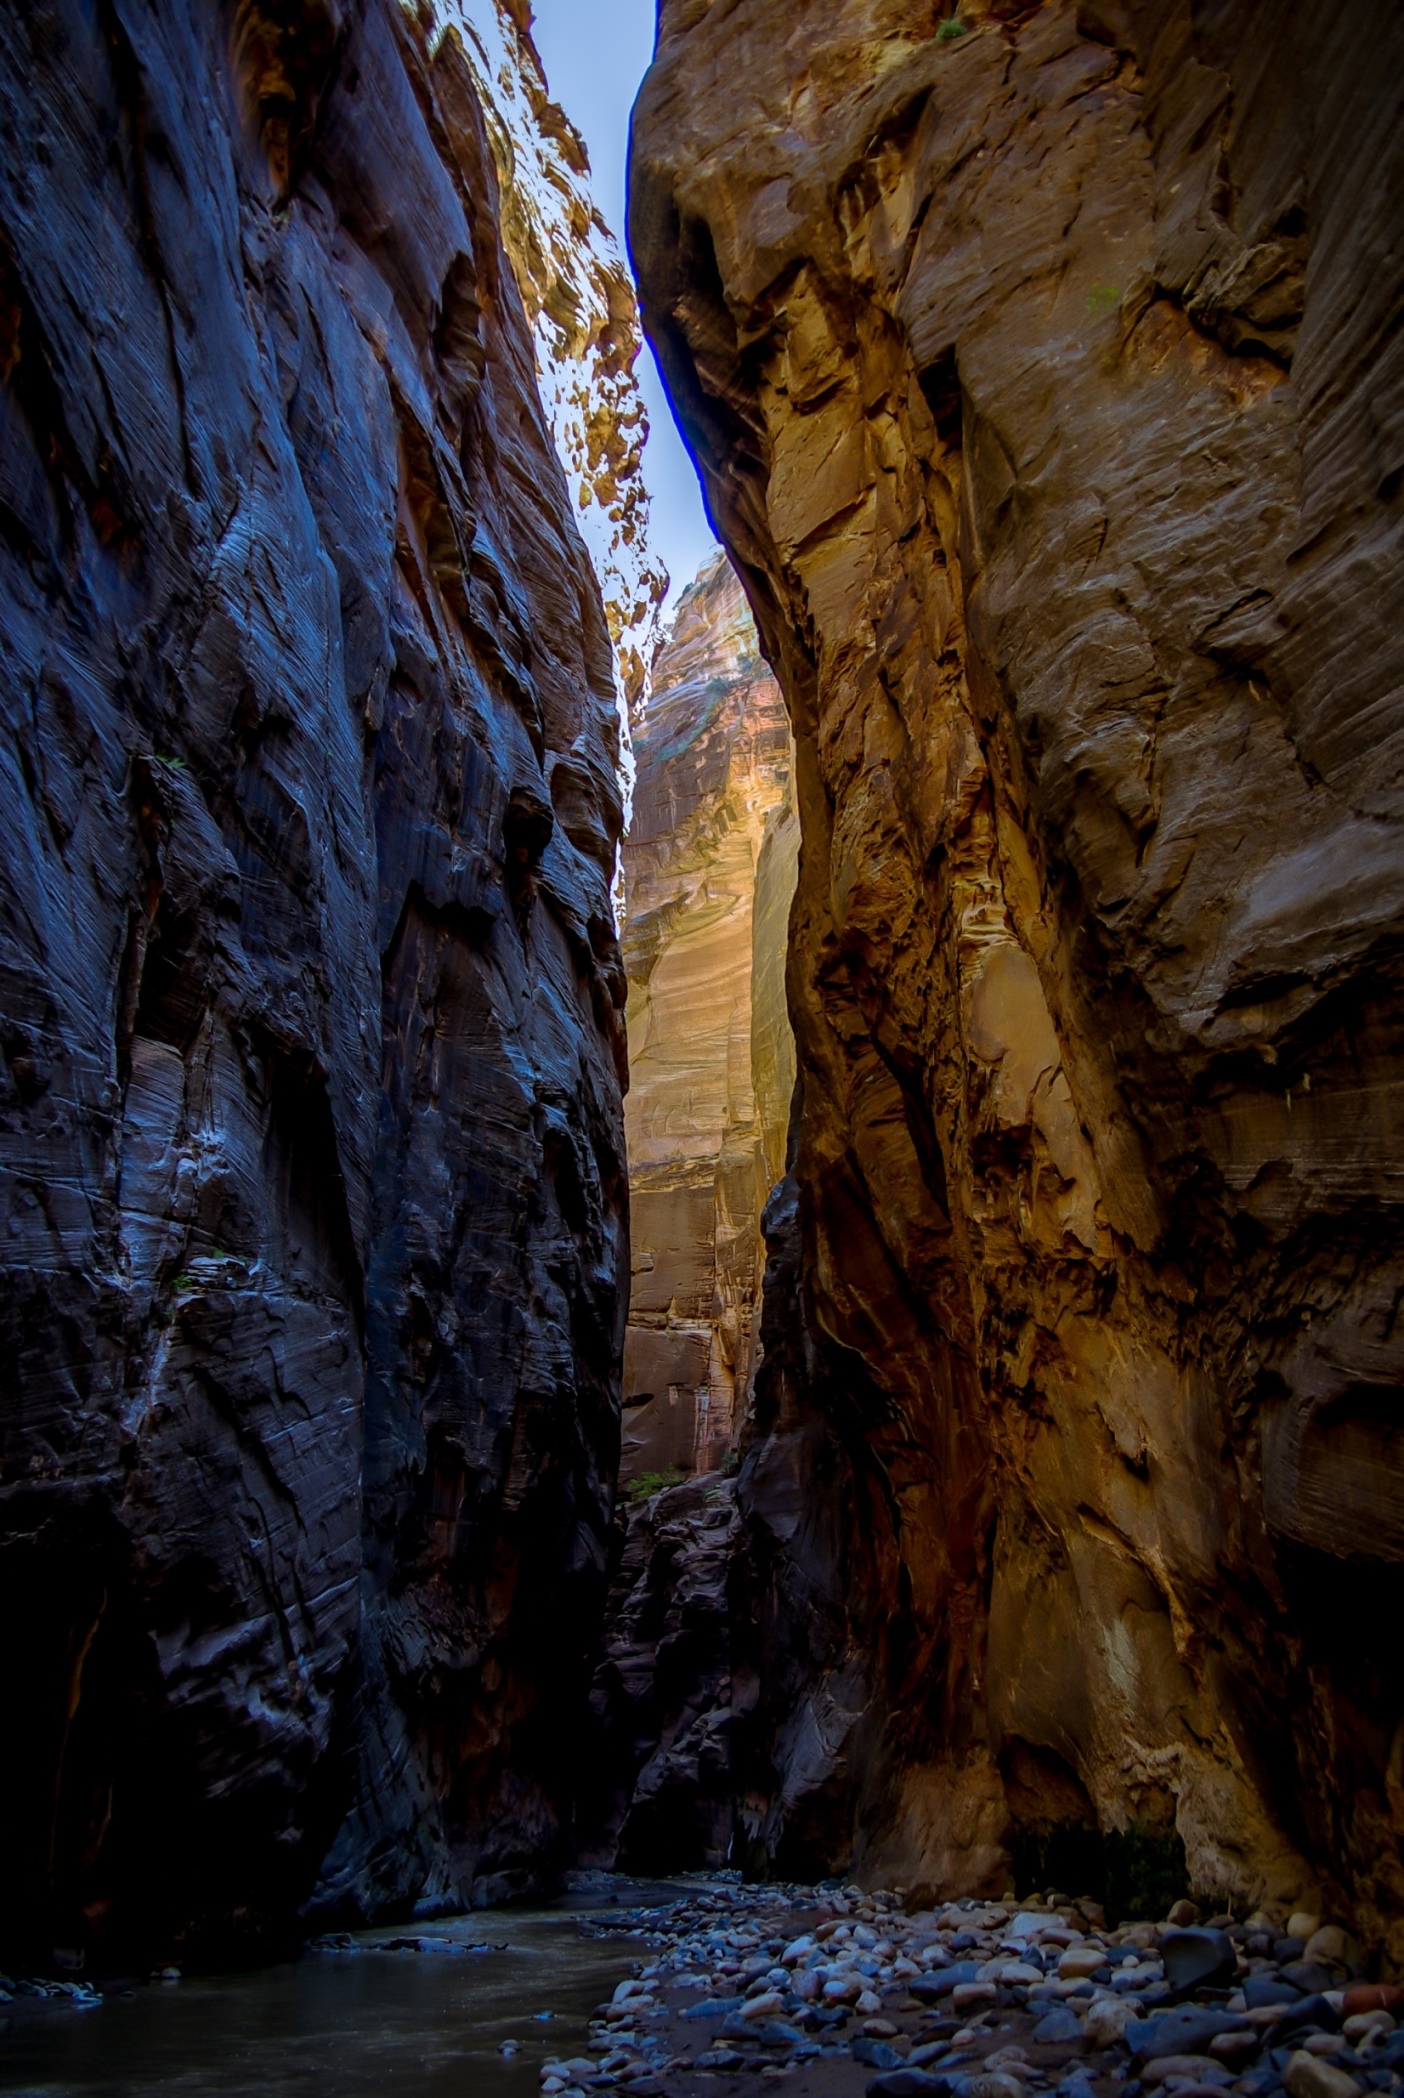 Tall Walls Of Virgin River Narrows In Zion National Park, UT